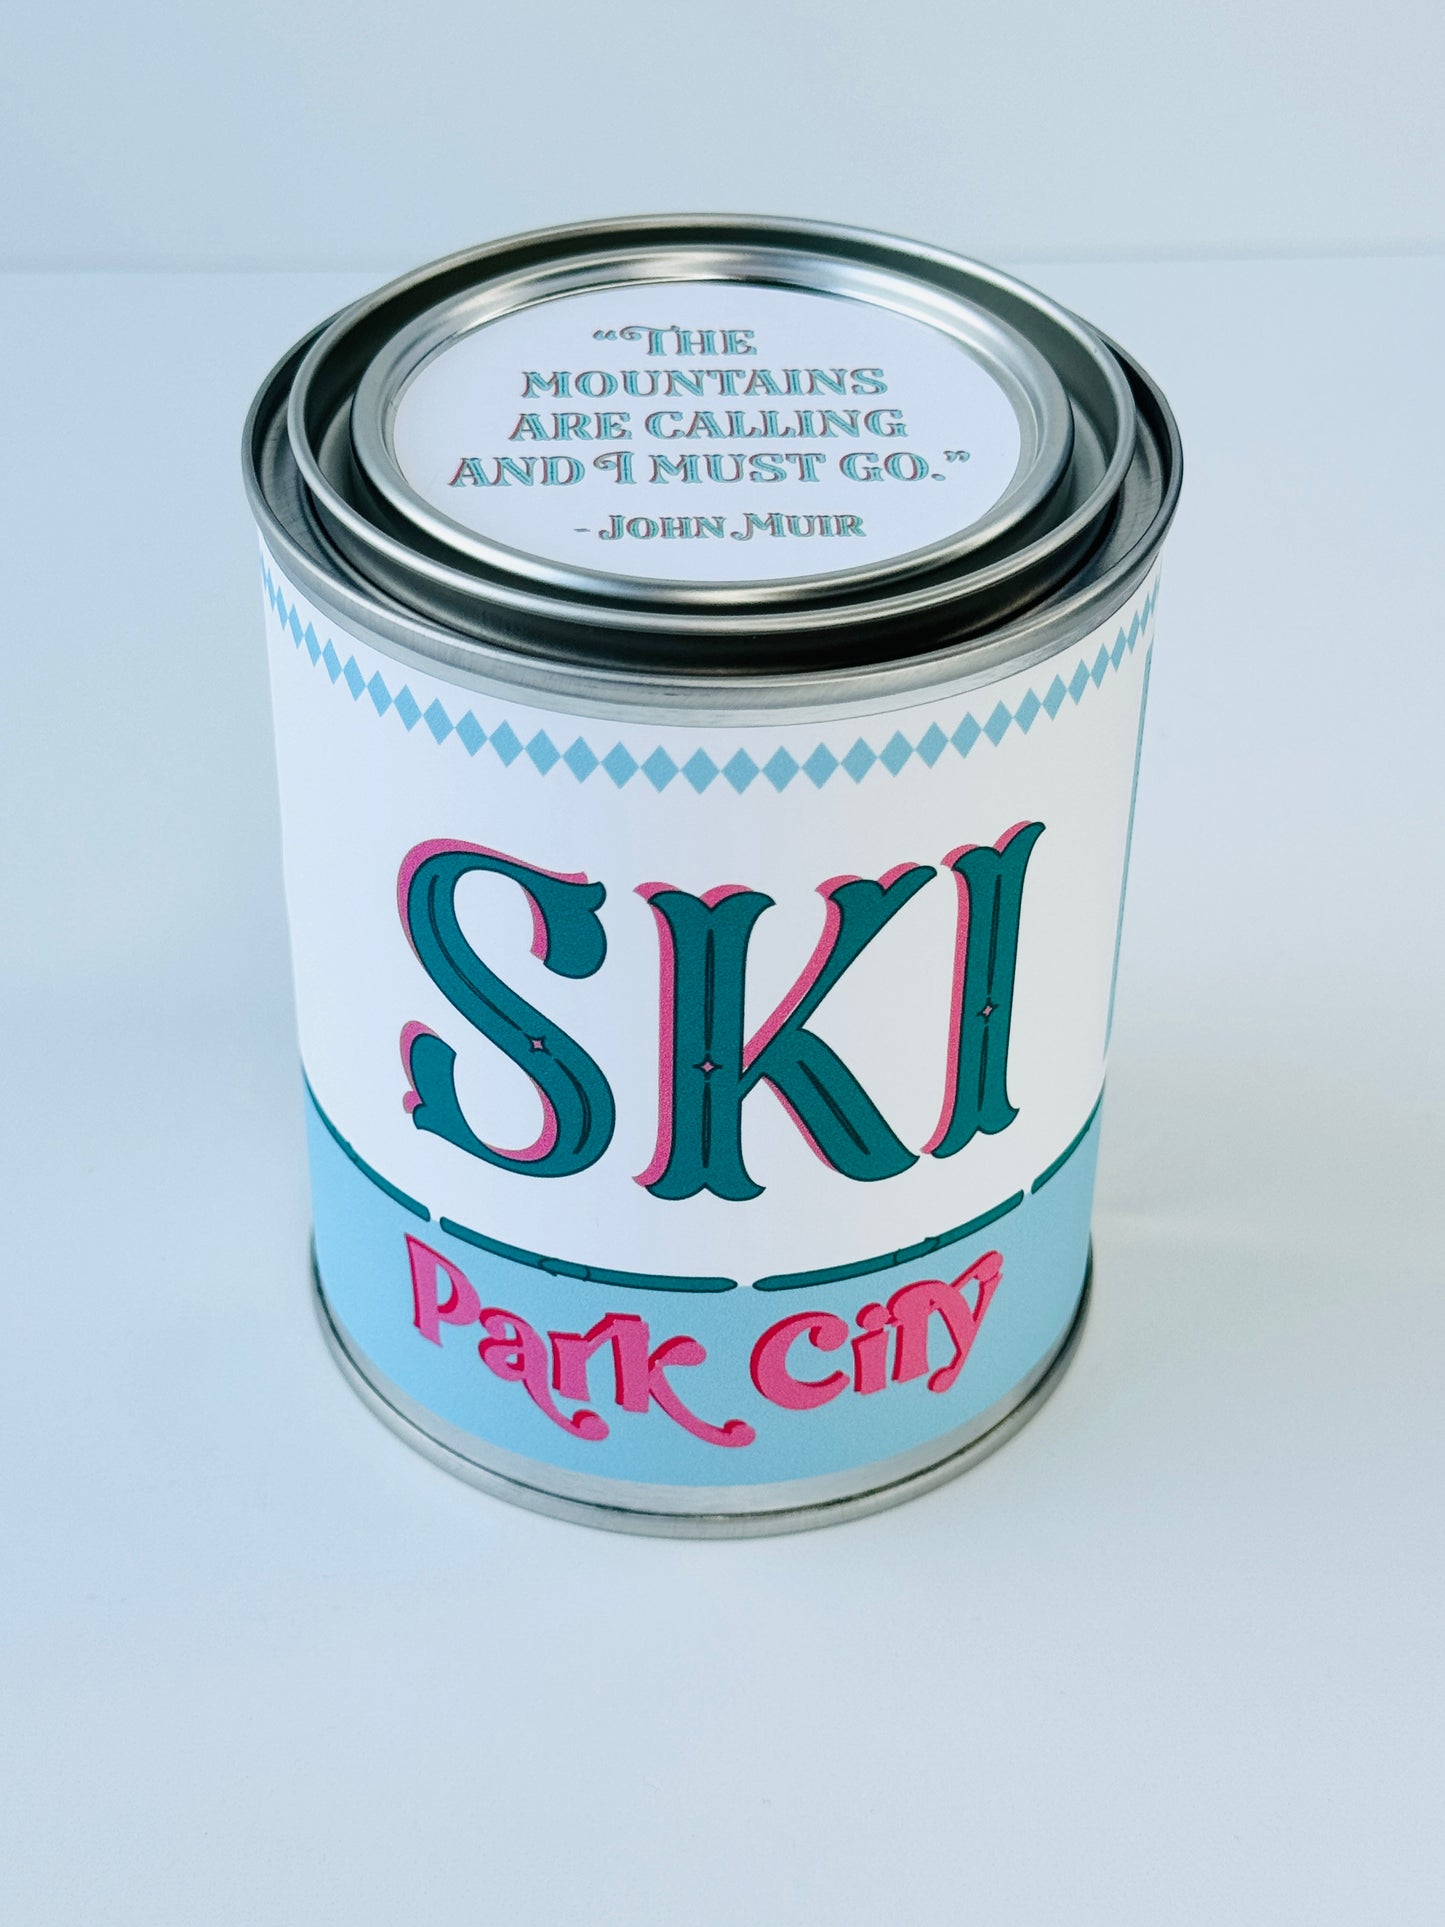 Ski Park City - Paint Tin Candle